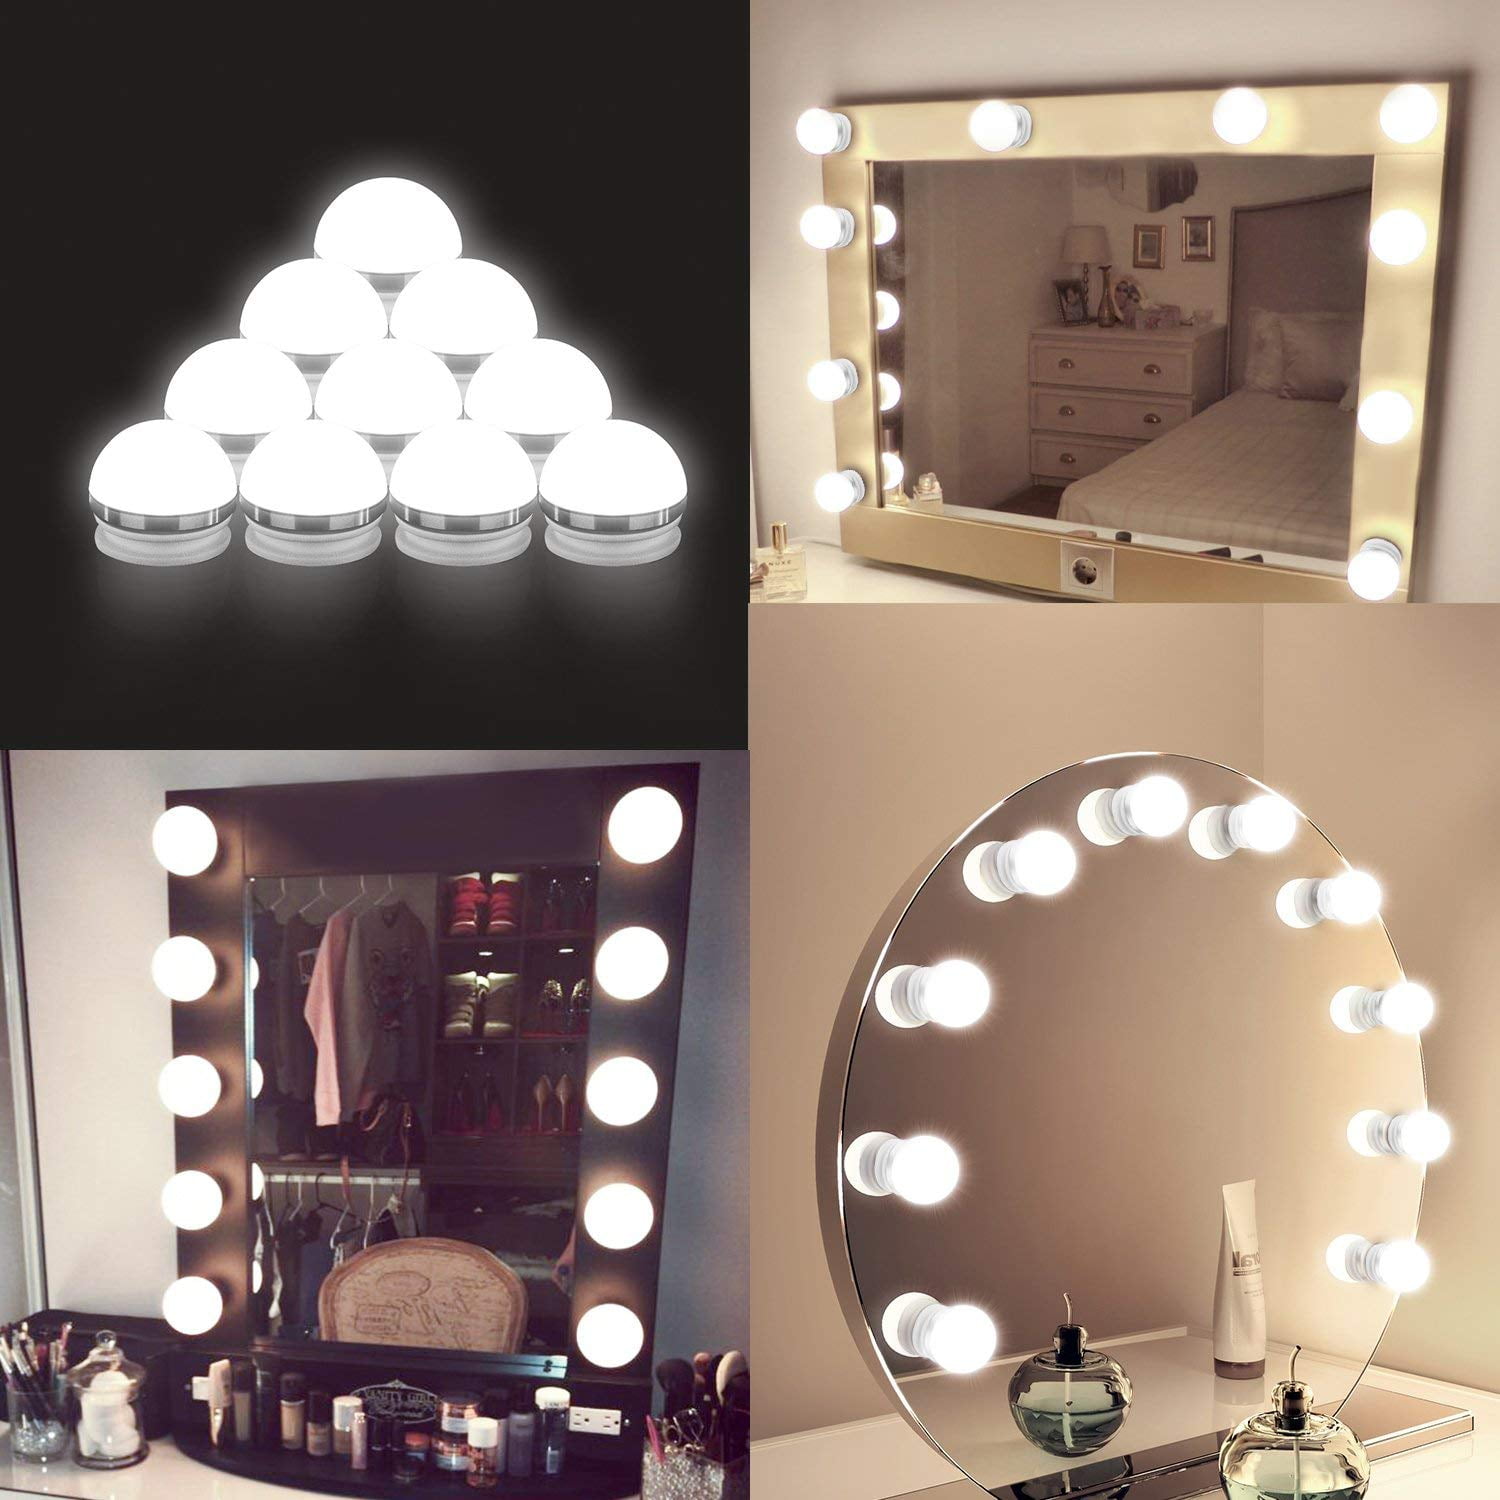 Details about   Mirror Front Vanity Lighting Wall Mount Picture Bathroom Lamp Fixture Adjustable 